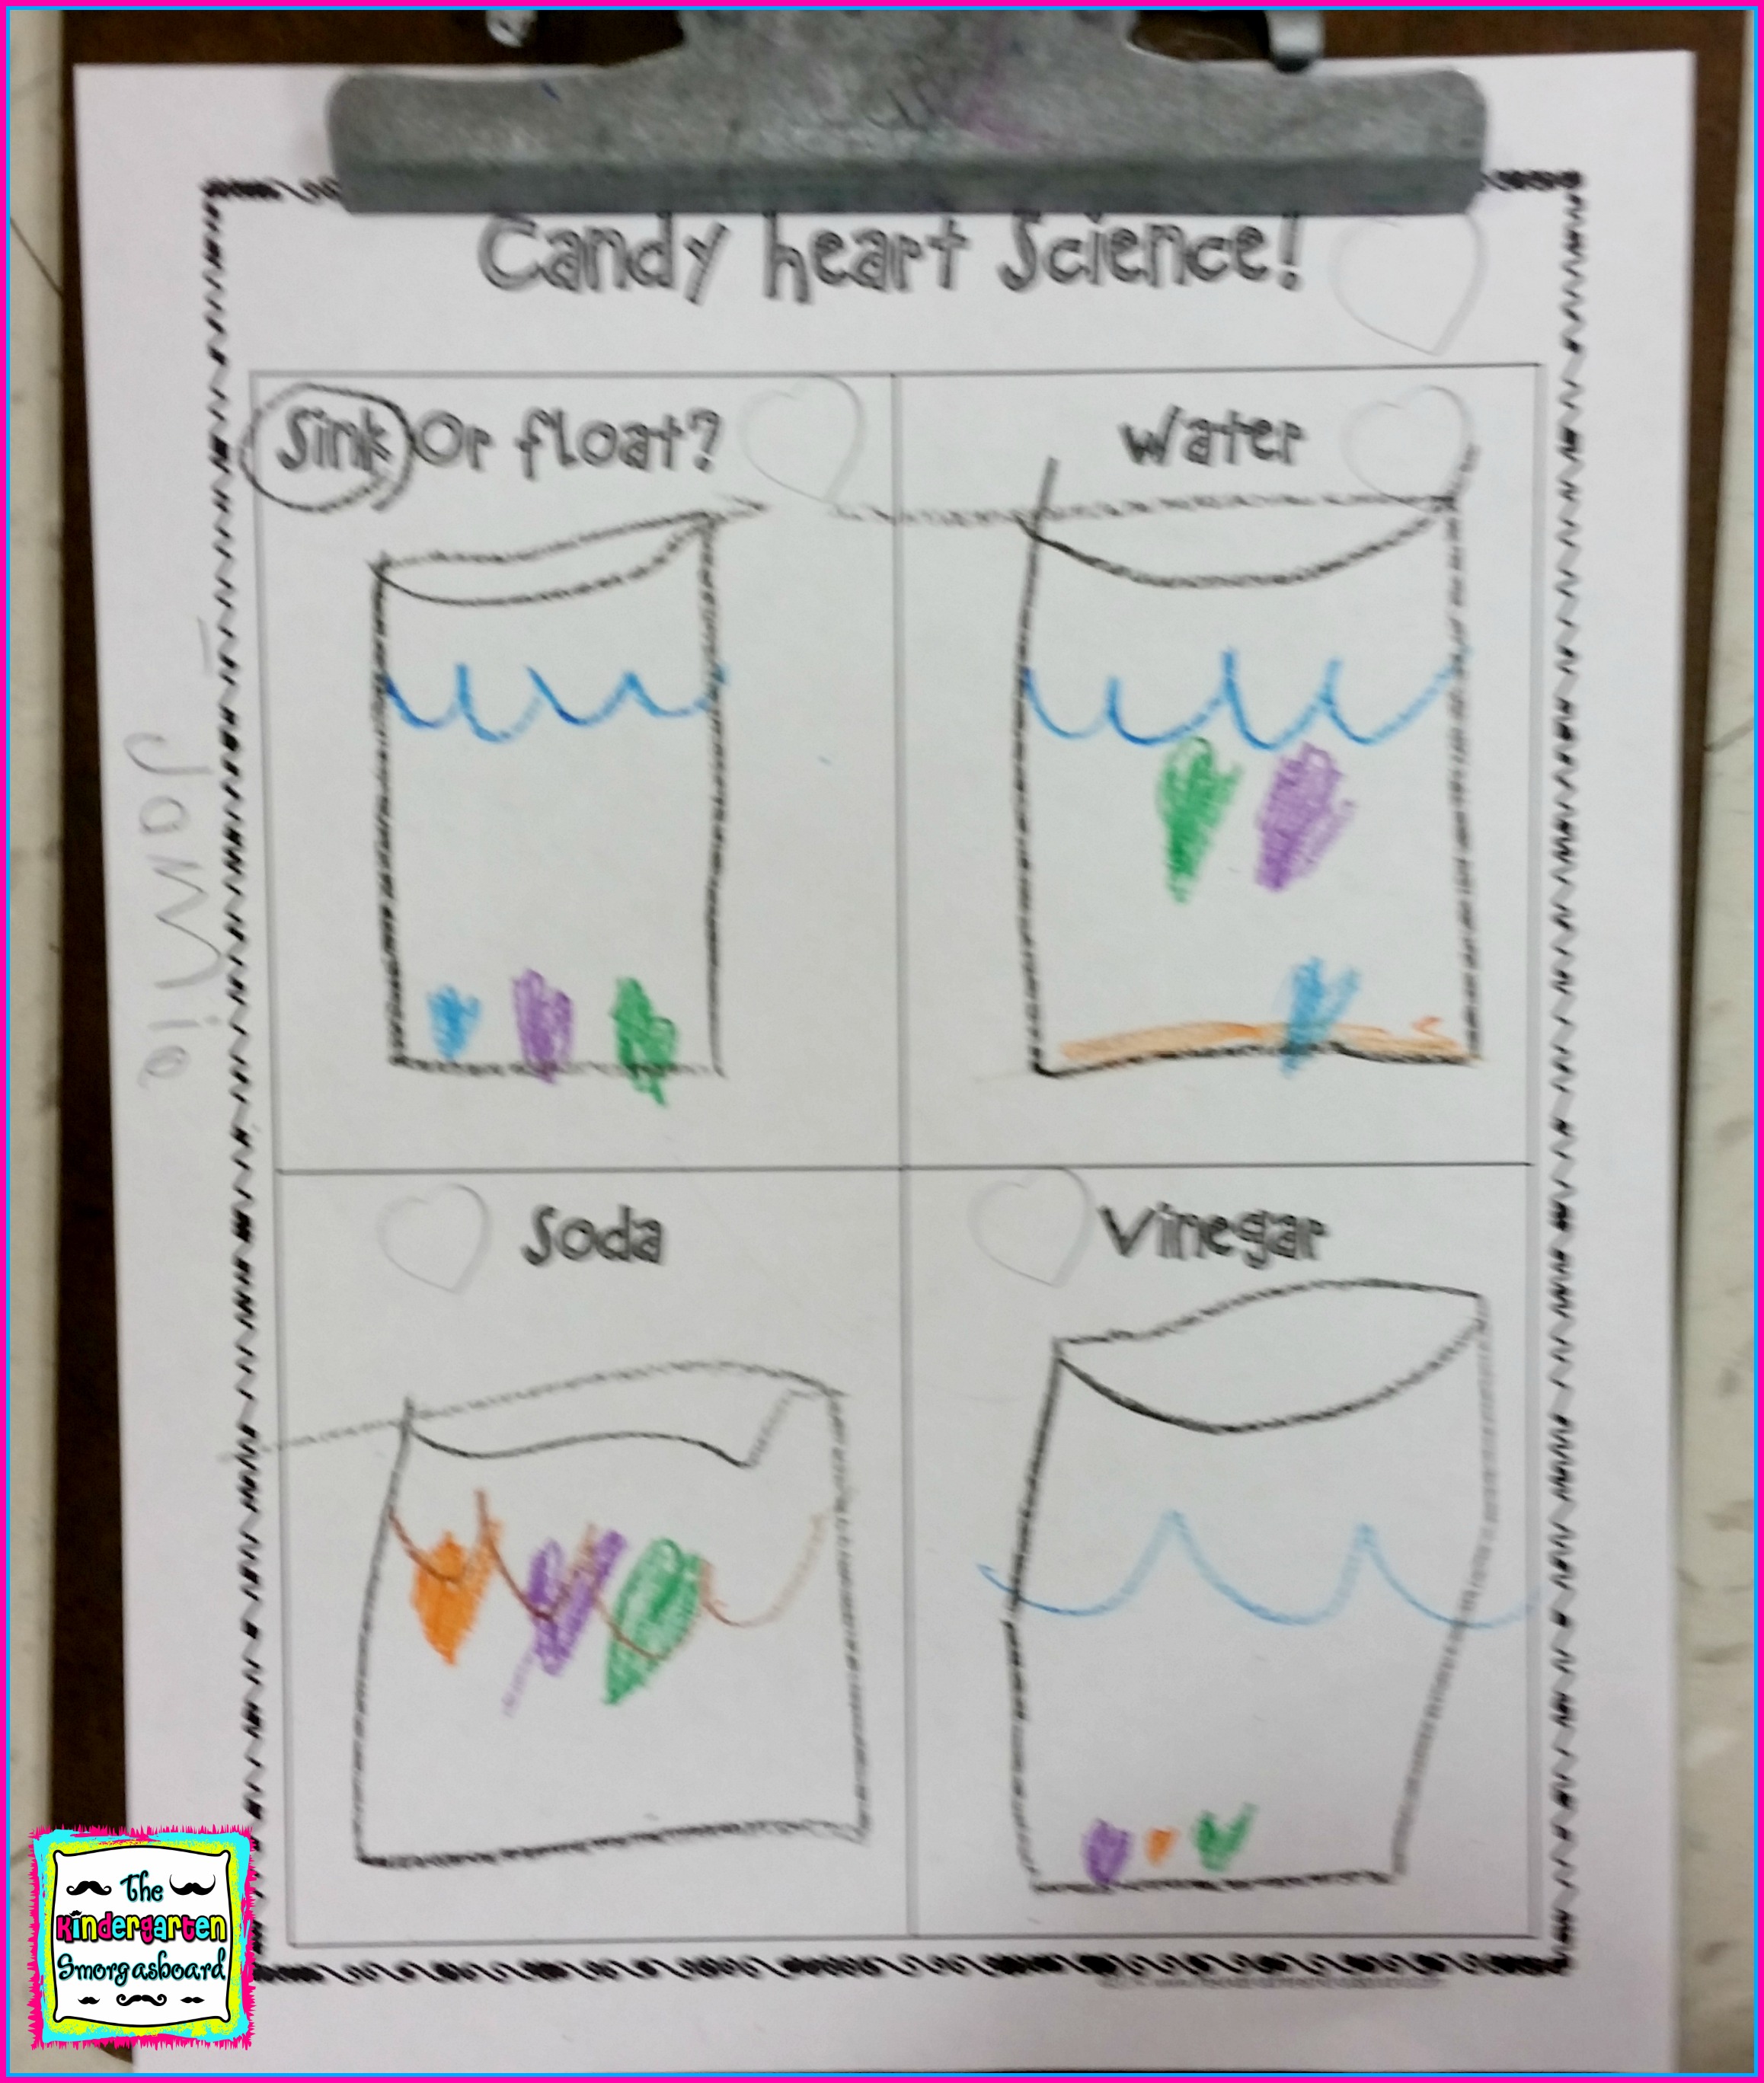 candy-heart-science-recording-sheet-the-kindergarten-smorgasboard